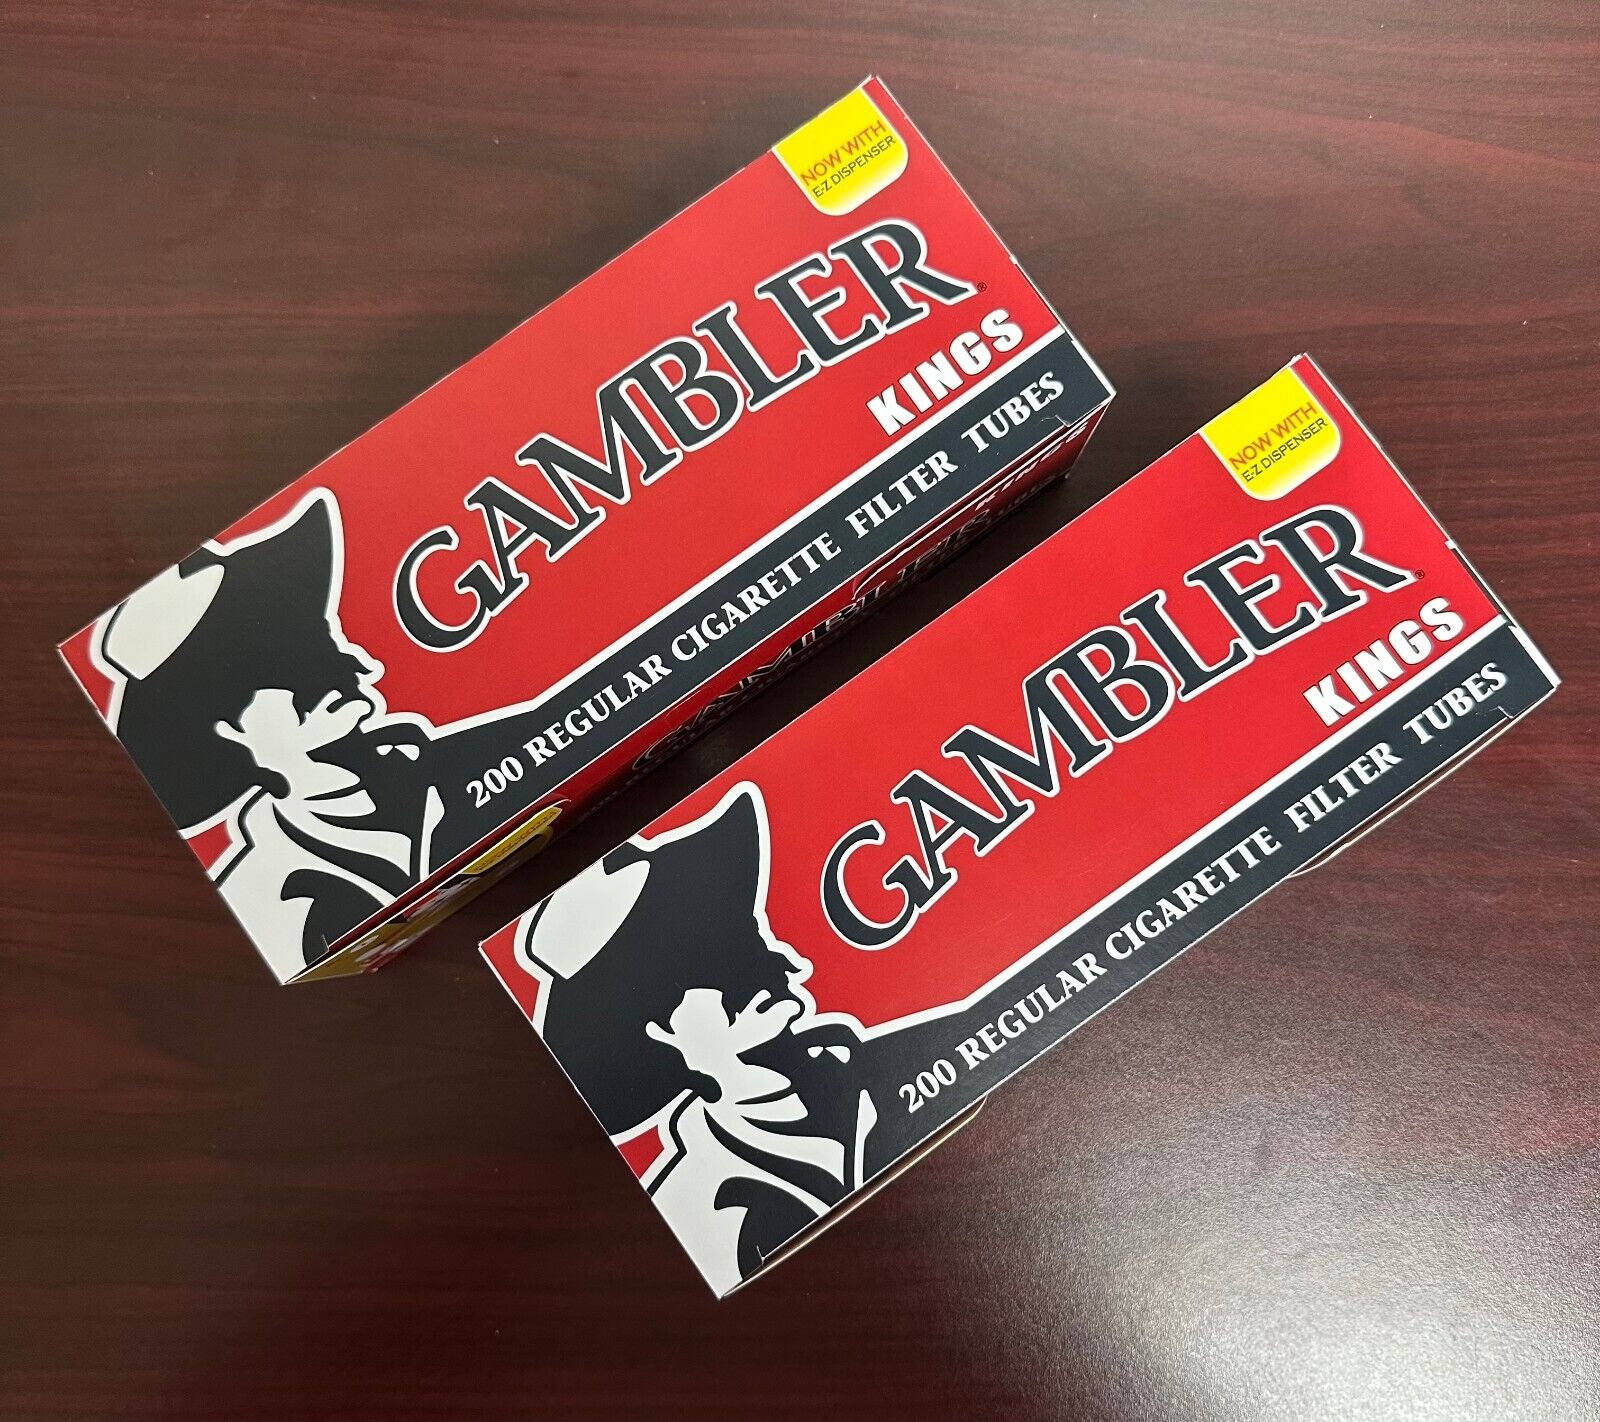 Gambler Regular King Size Cigarette Tubes ~2 Packs